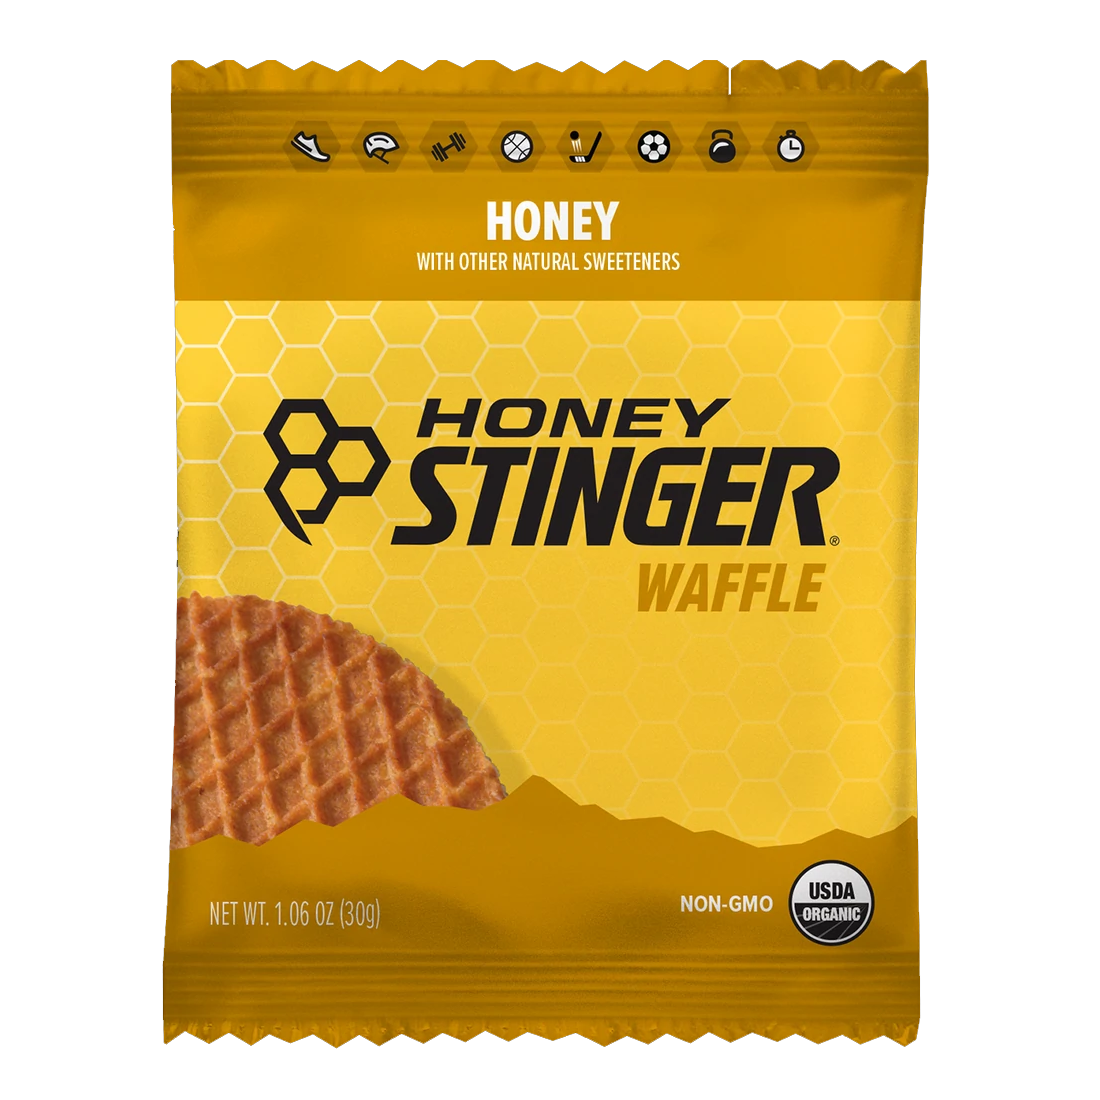 Honey Stinger Waffles alternate view